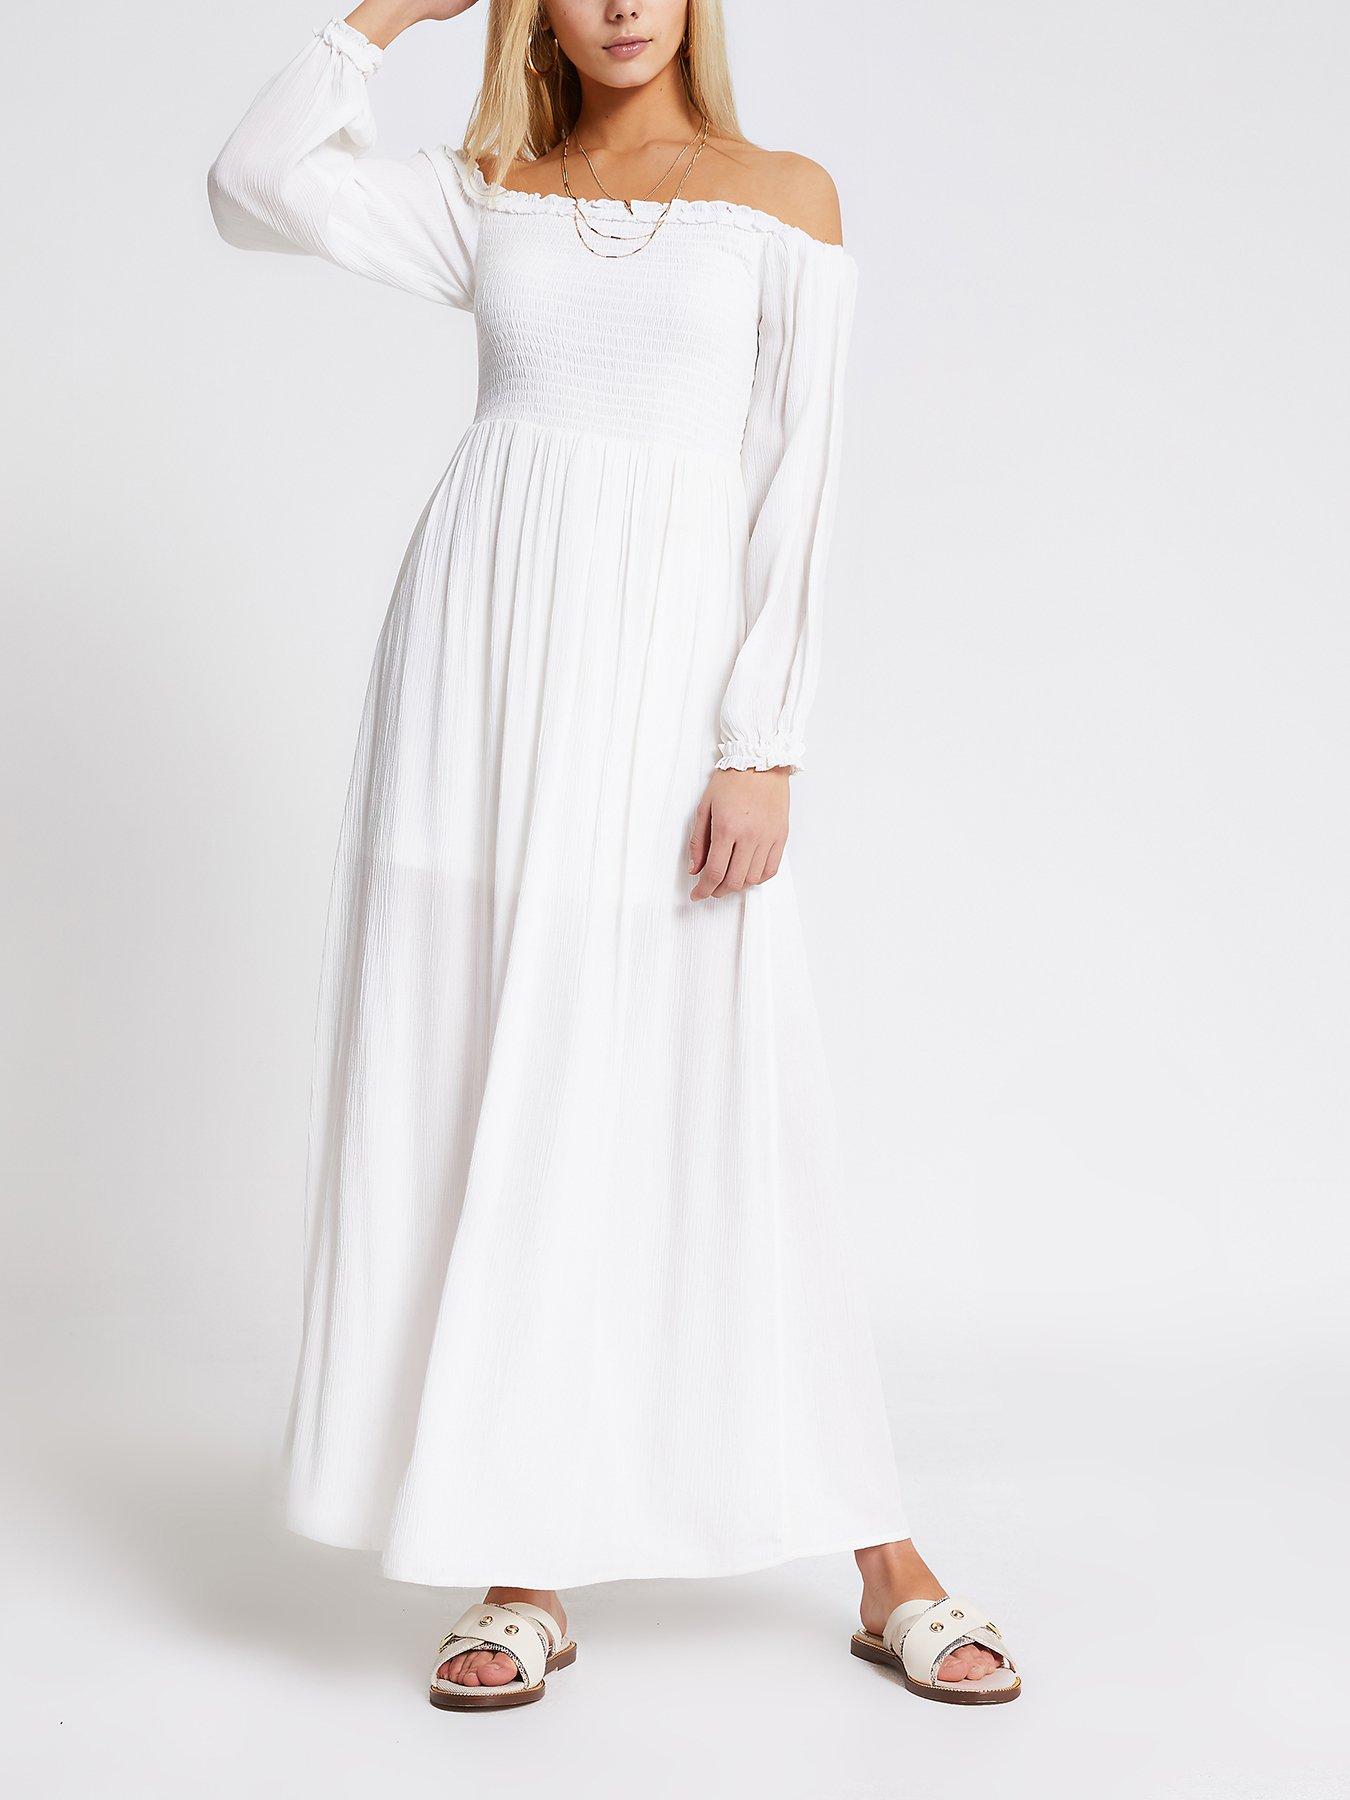 river island white linen dress